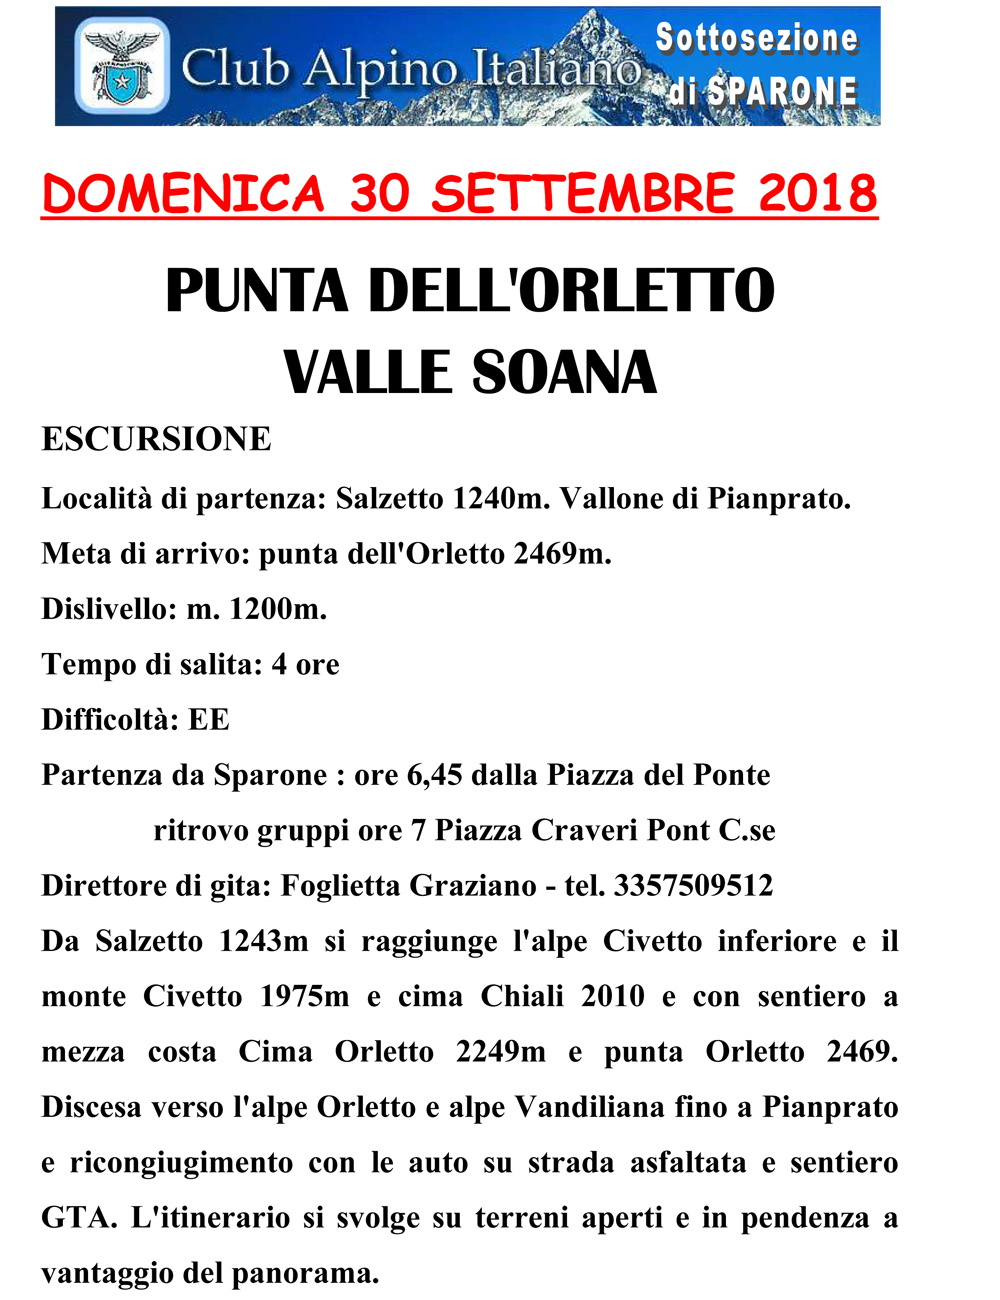 2019-09-24 gita punta orletto.jpg